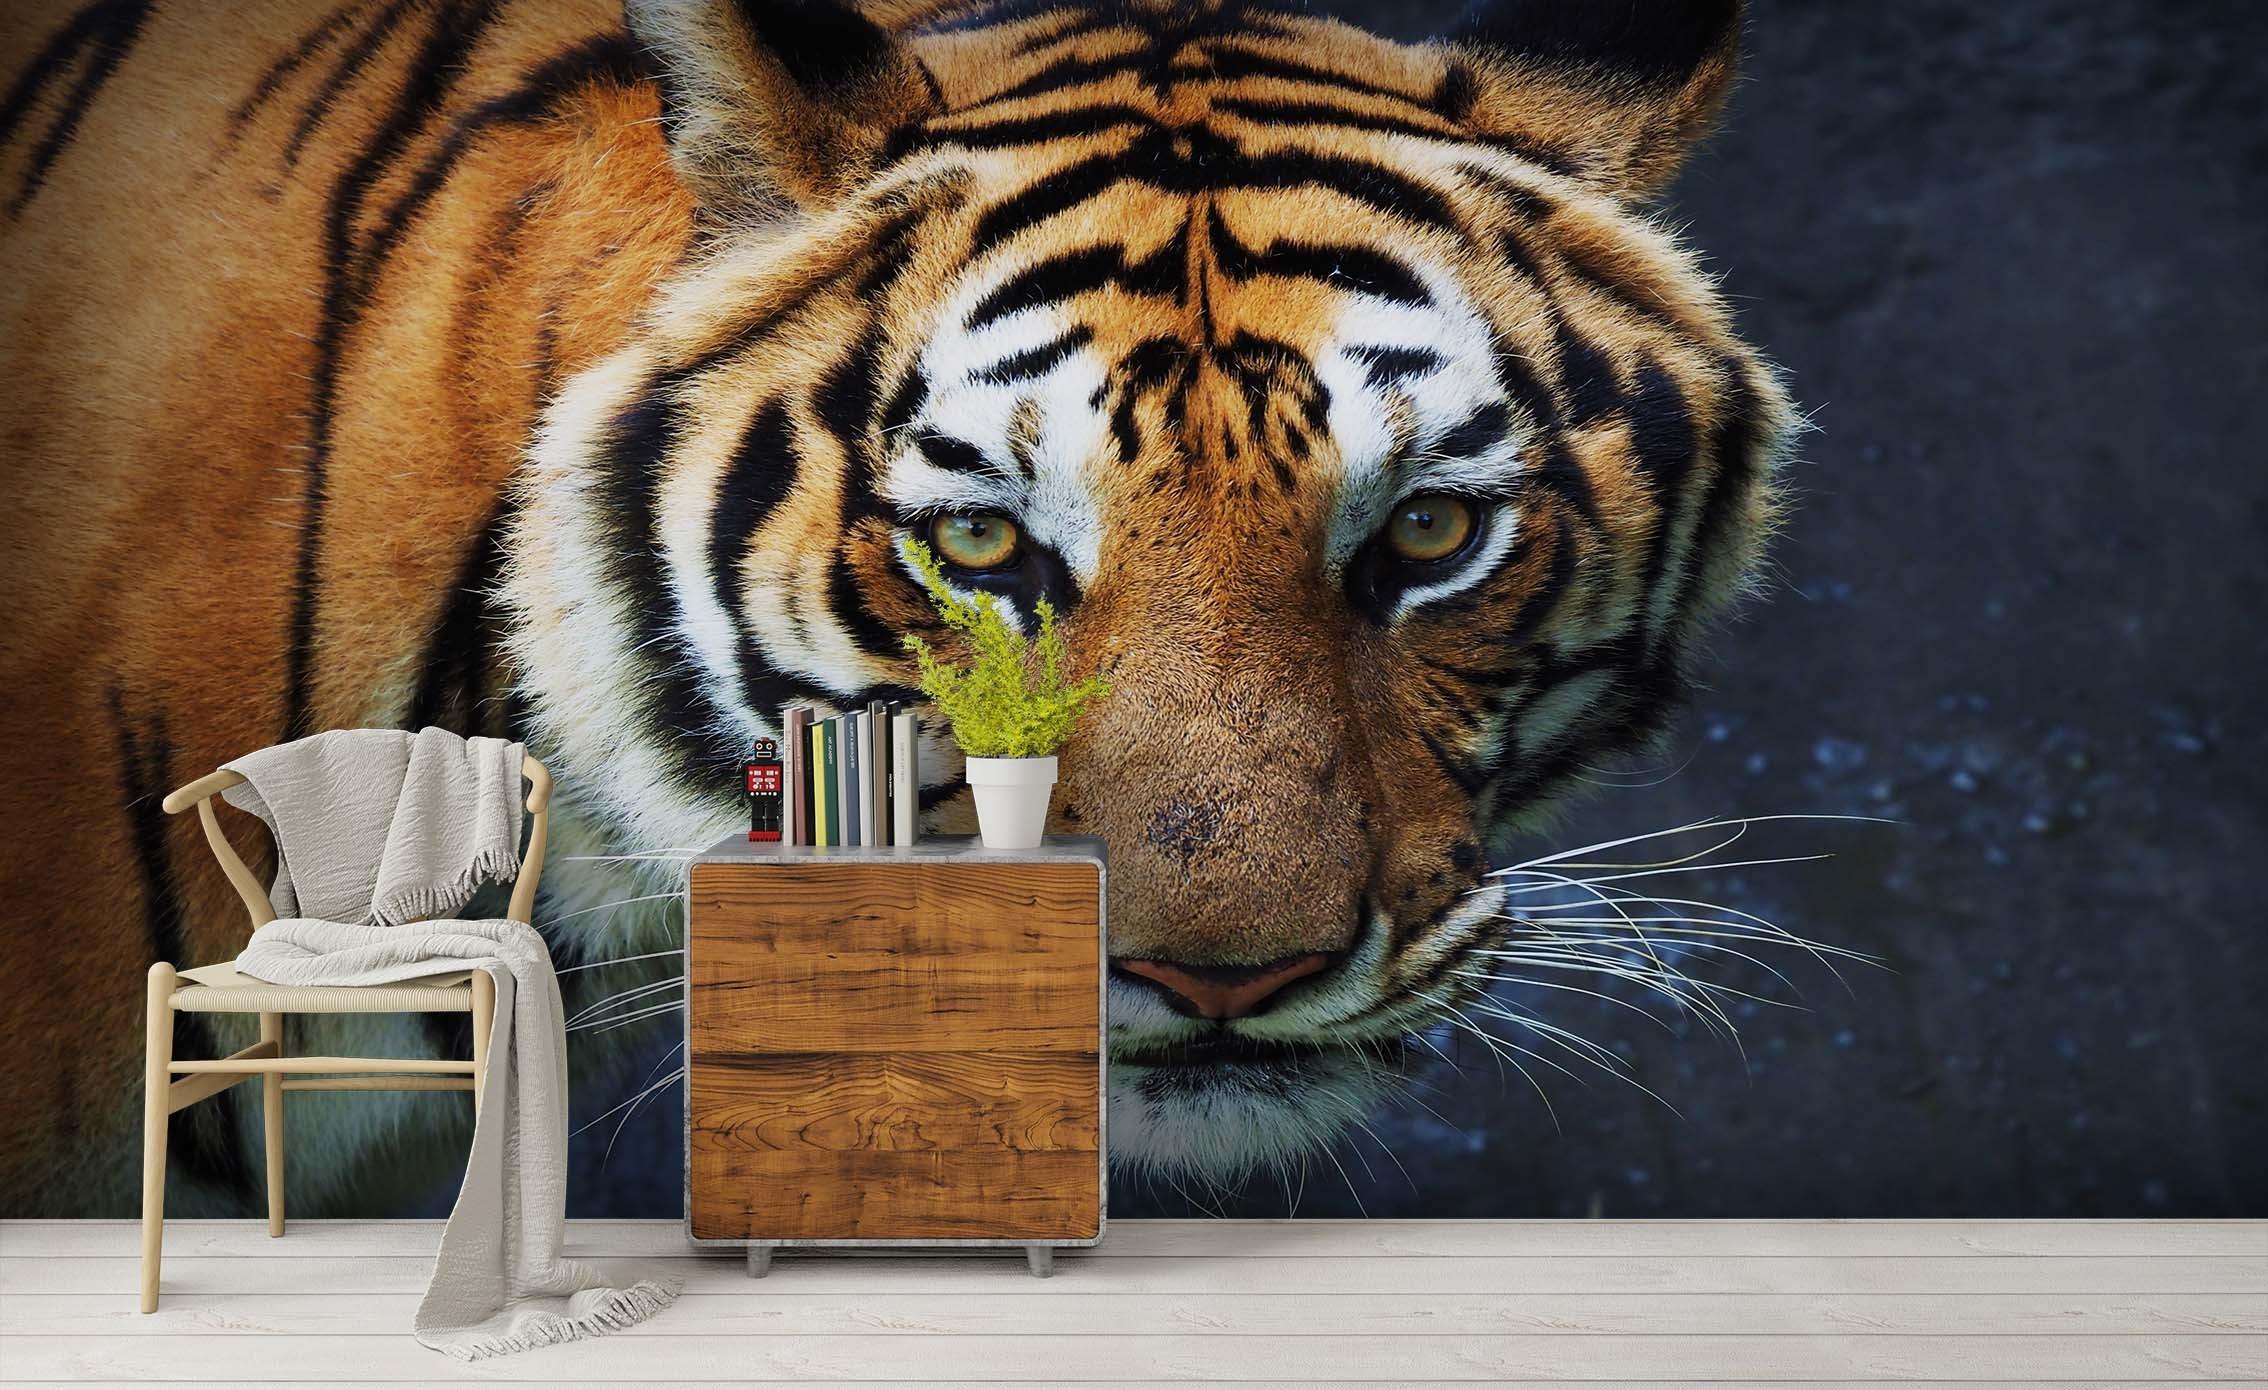 3D Animal Tiger Wall Mural Wallpaper 121 LQH- Jess Art Decoration